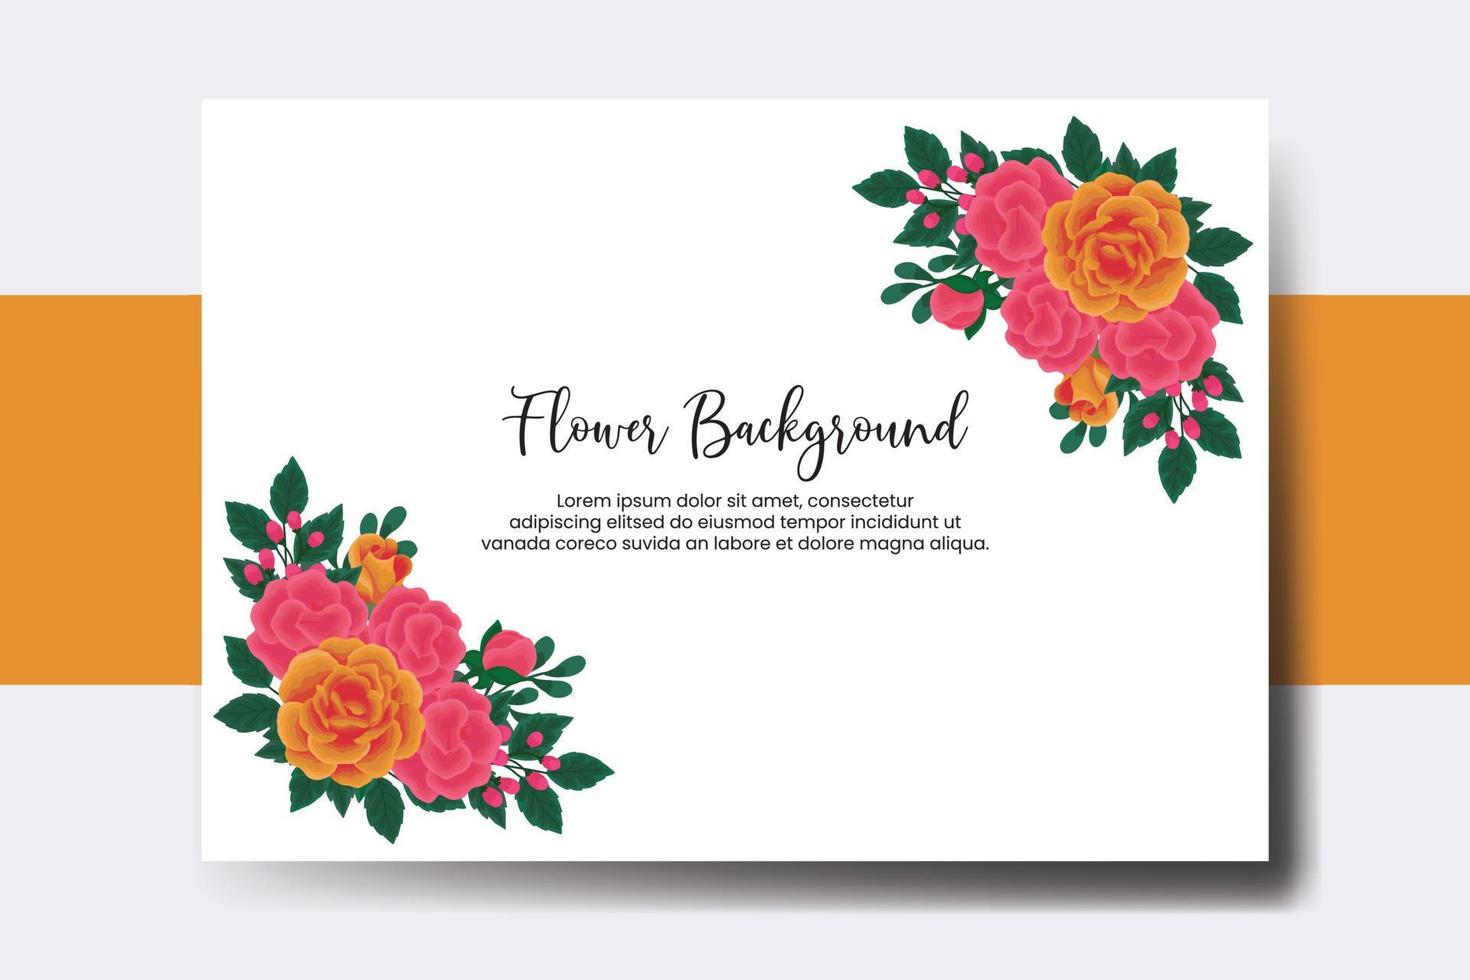 Wedding banner flower background, Digital watercolor hand drawn Orange Rose Flower design Template vector